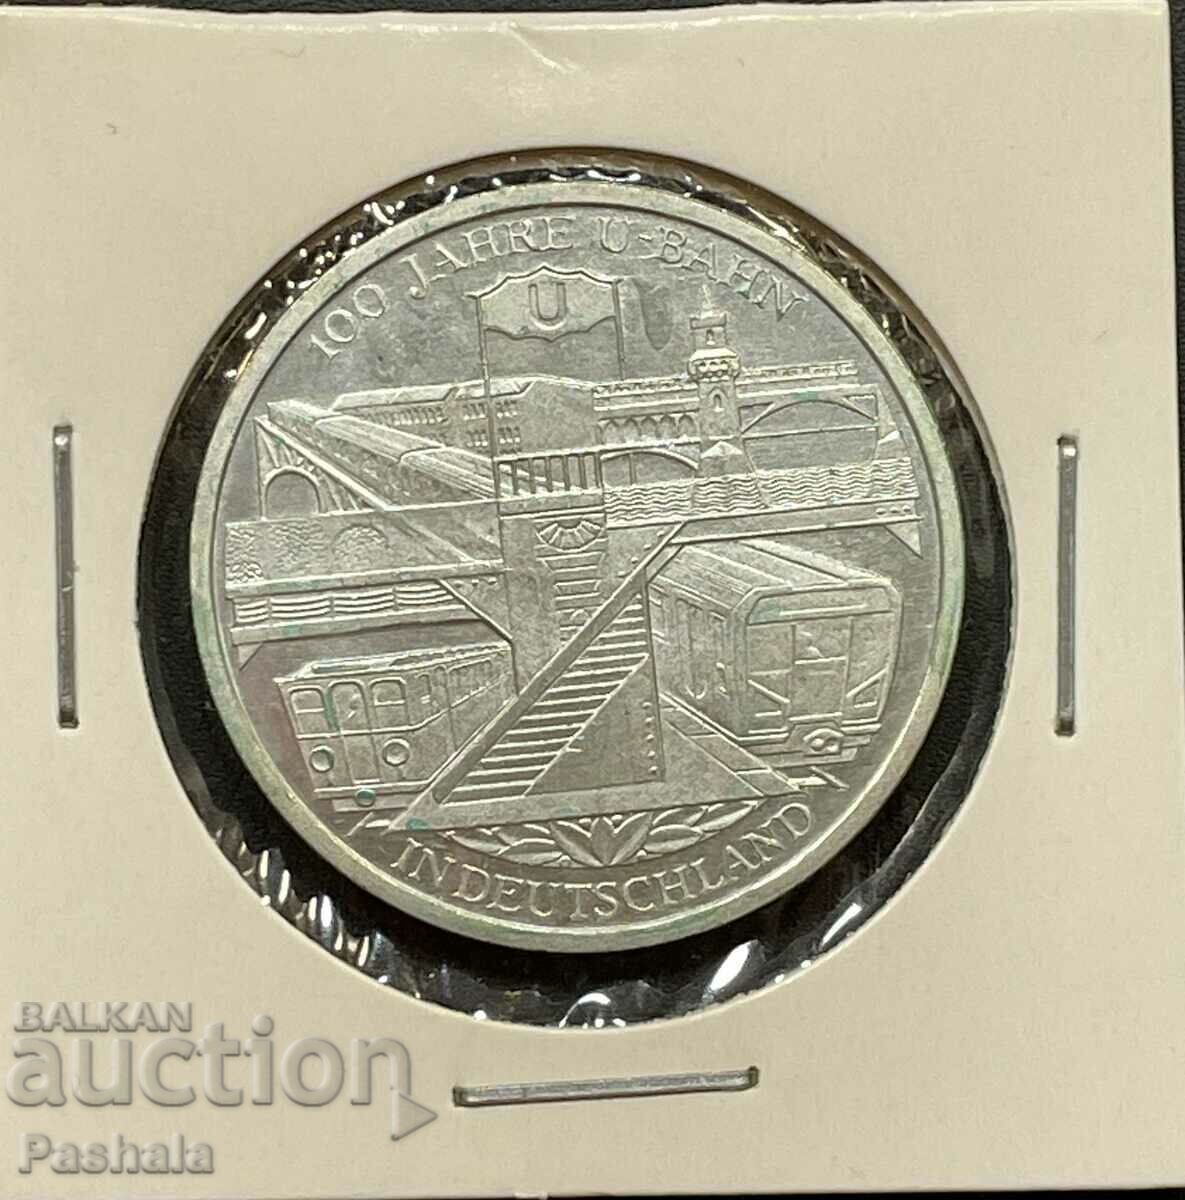 Germania 10 Euro 2002 Argint.